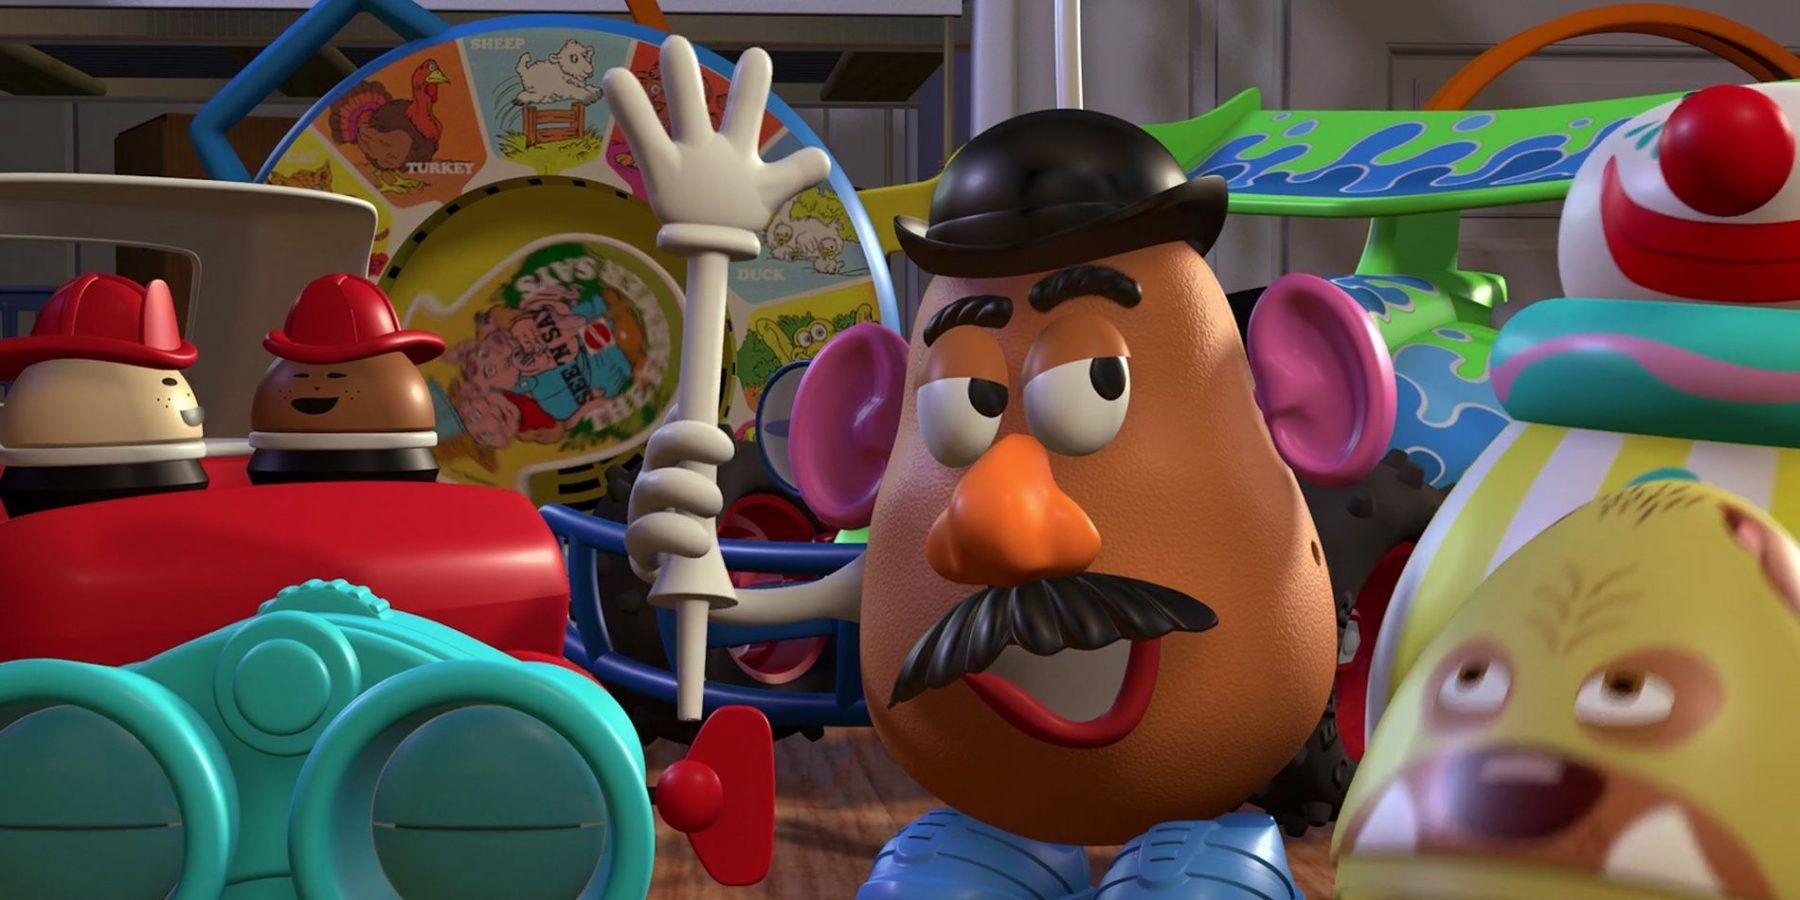 Mr. Potato Head in Toy Story 4